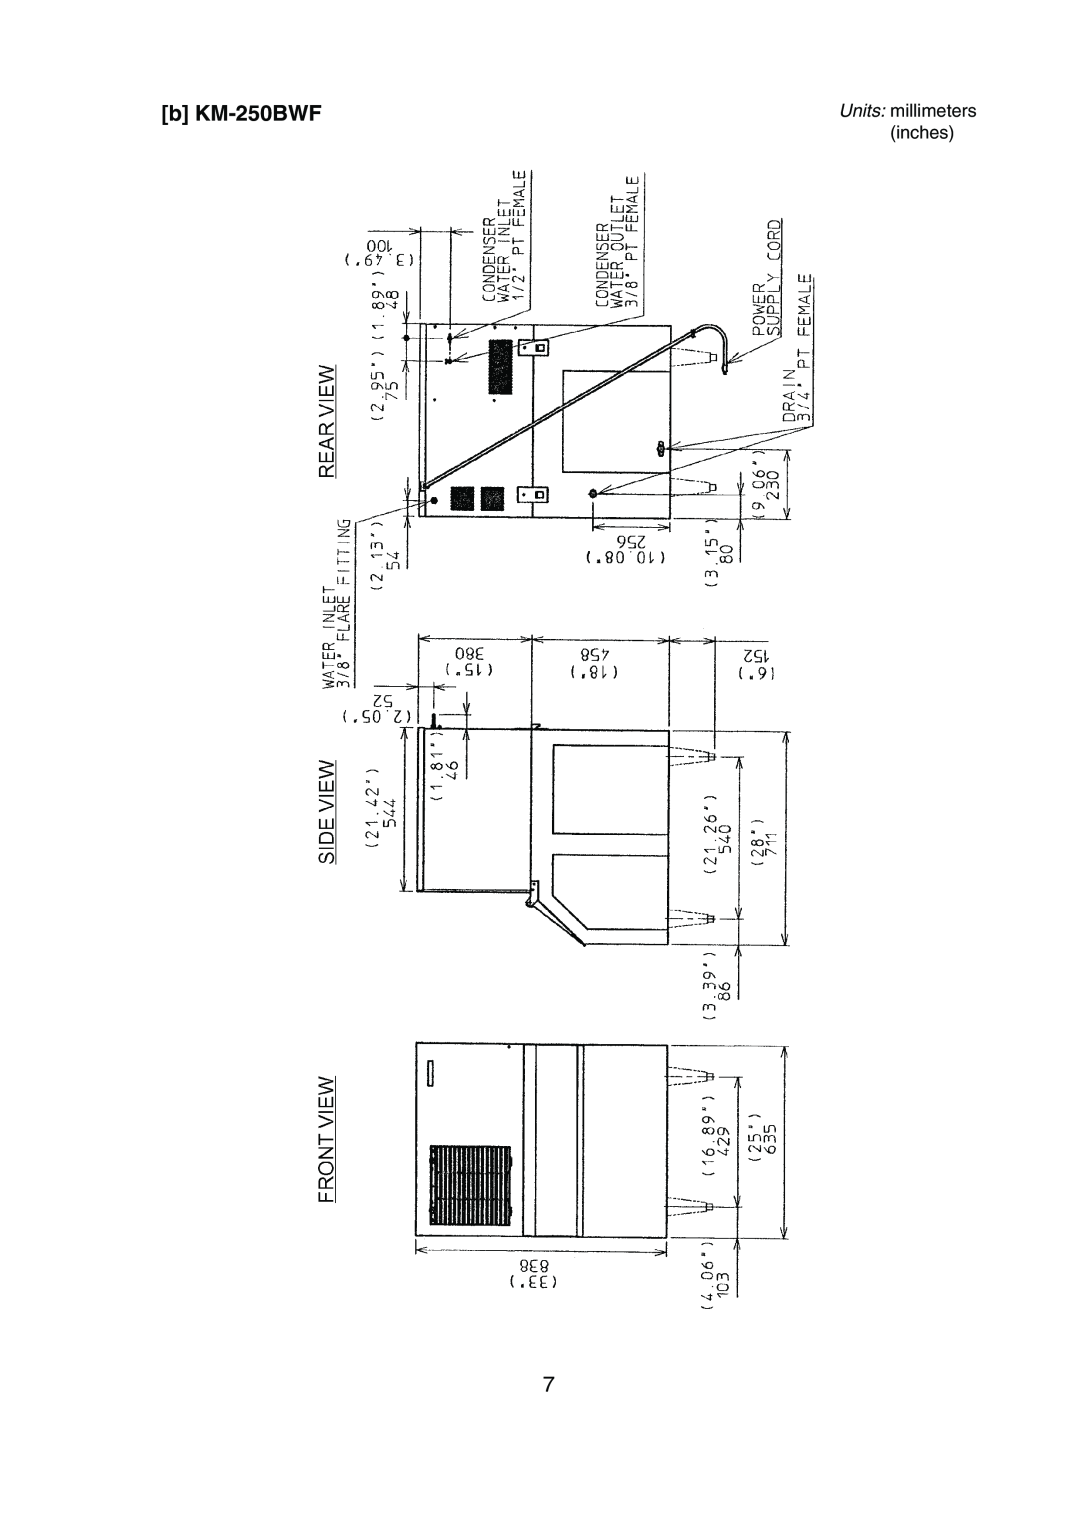 Hoshizaki KM-250BAF instruction manual b KM-250BWF, Units millimeters inches 